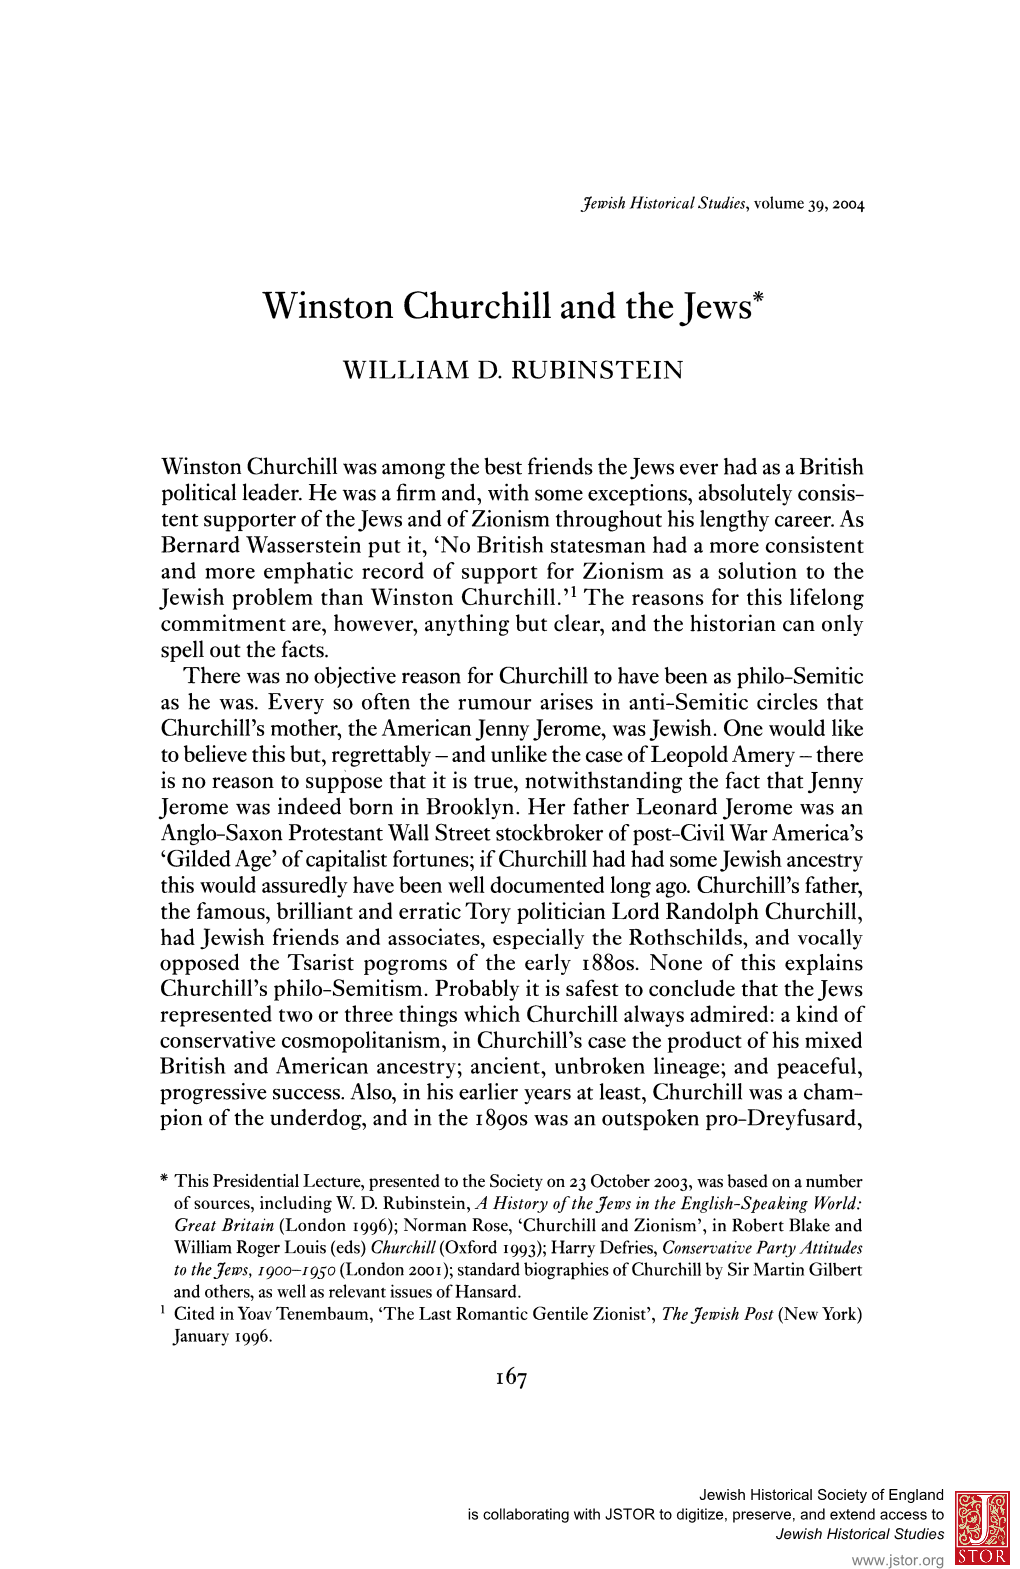 Winston Churchill and the Jews